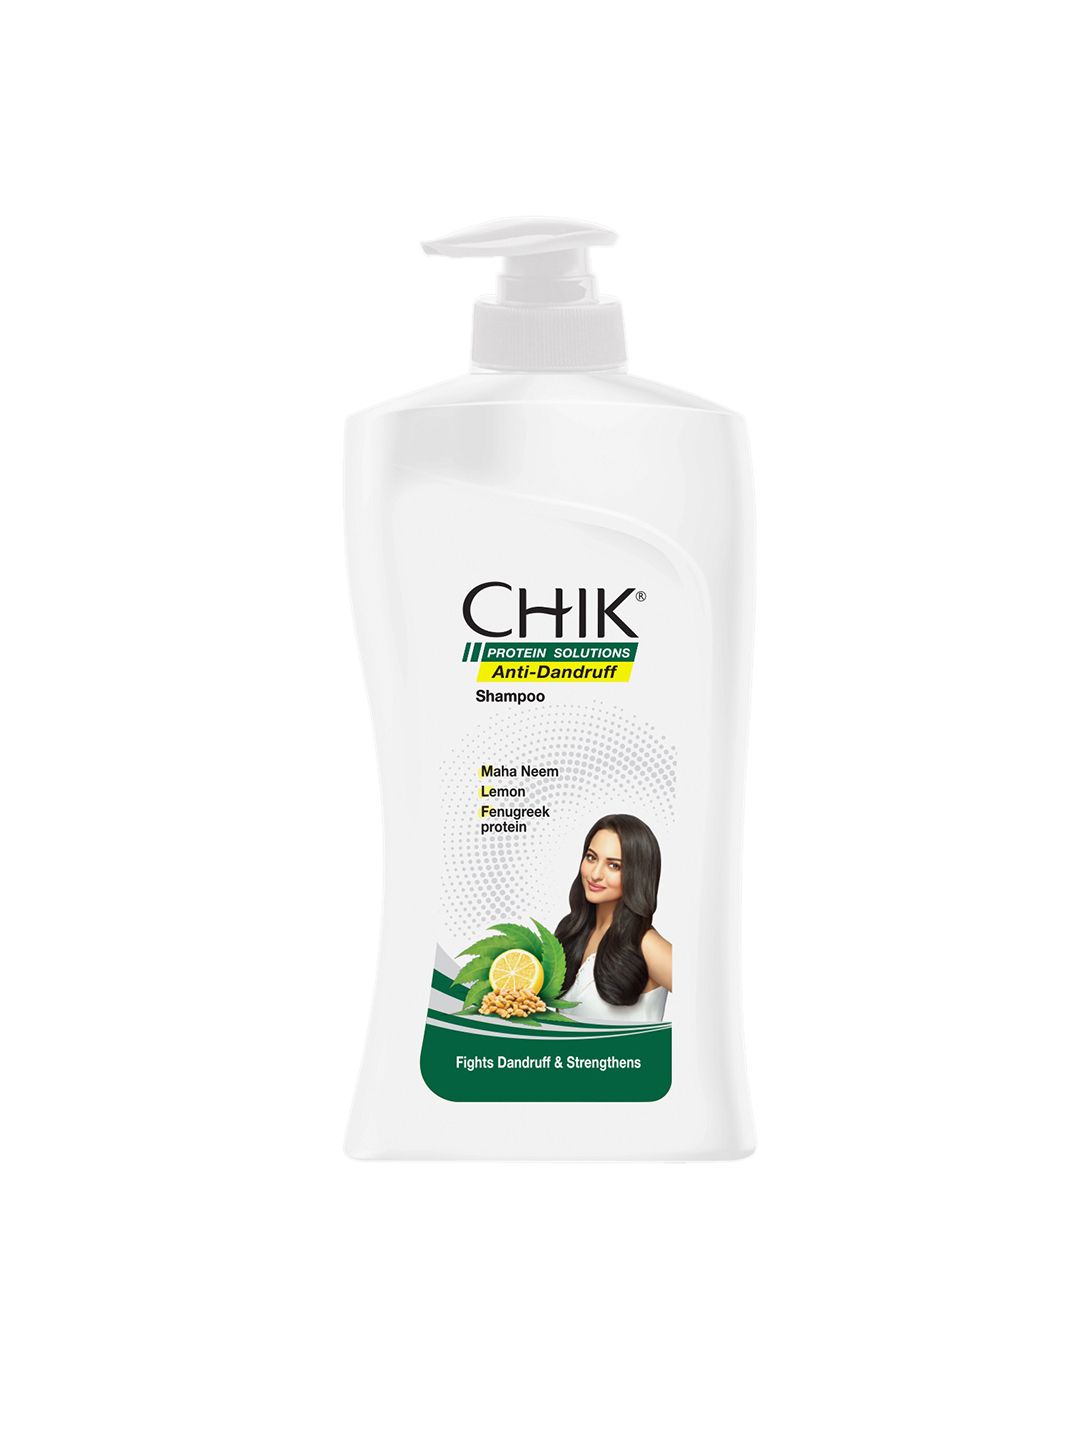 CHIK PROTEIN SOLUTIONS Anti Dandruff Shampoo 650ml Price in India